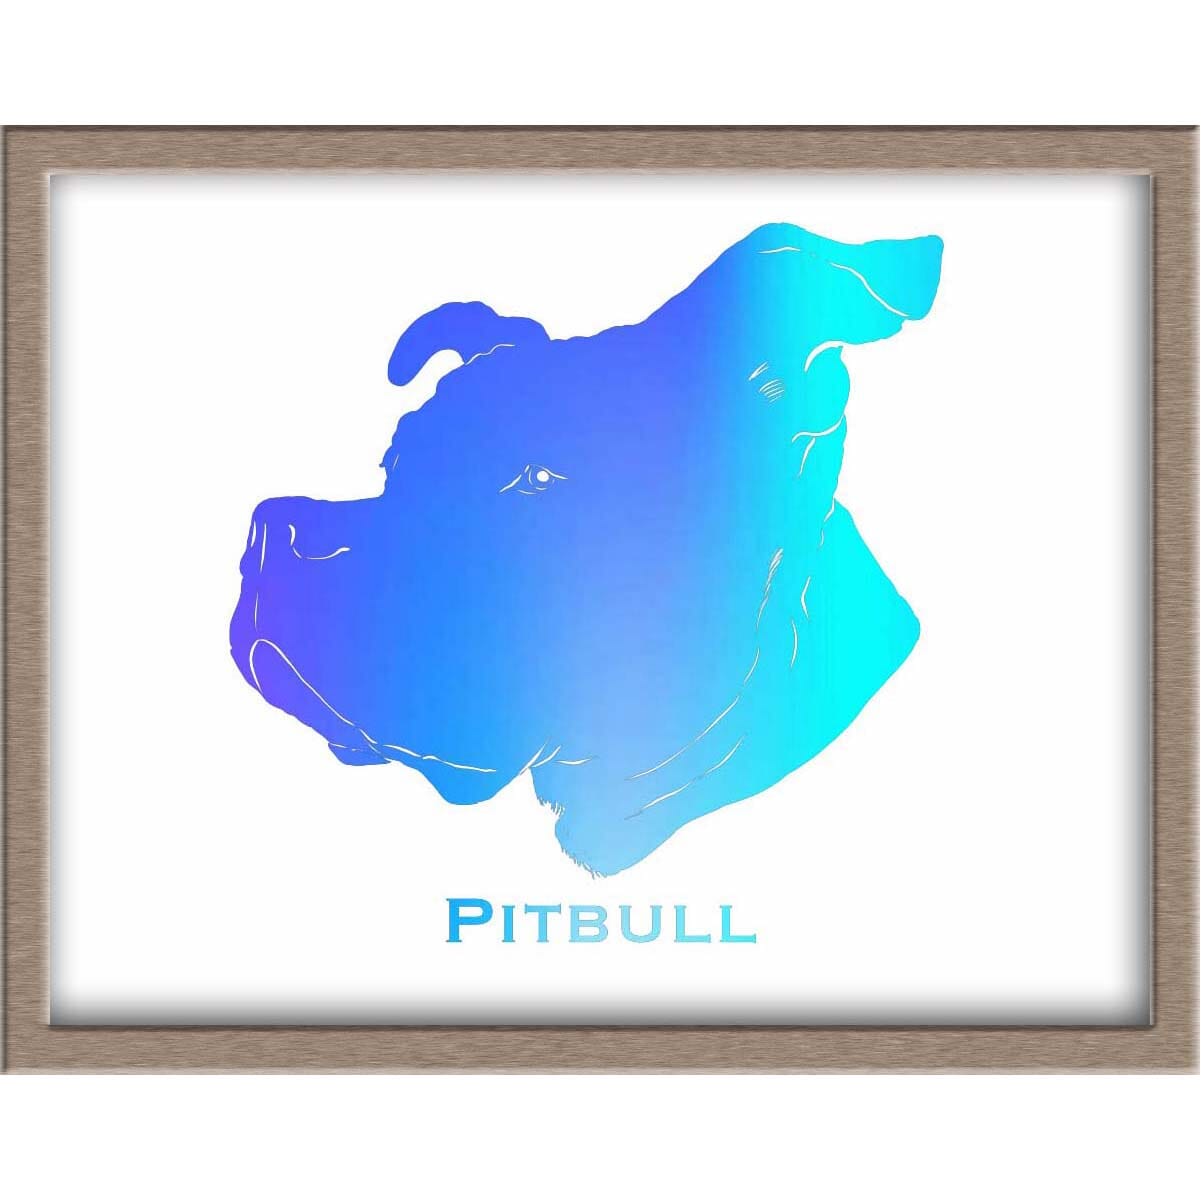 Pitbull Silhouette Foiled Print Posters, Prints, & Visual Artwork JoyousJoyfulJoyness 